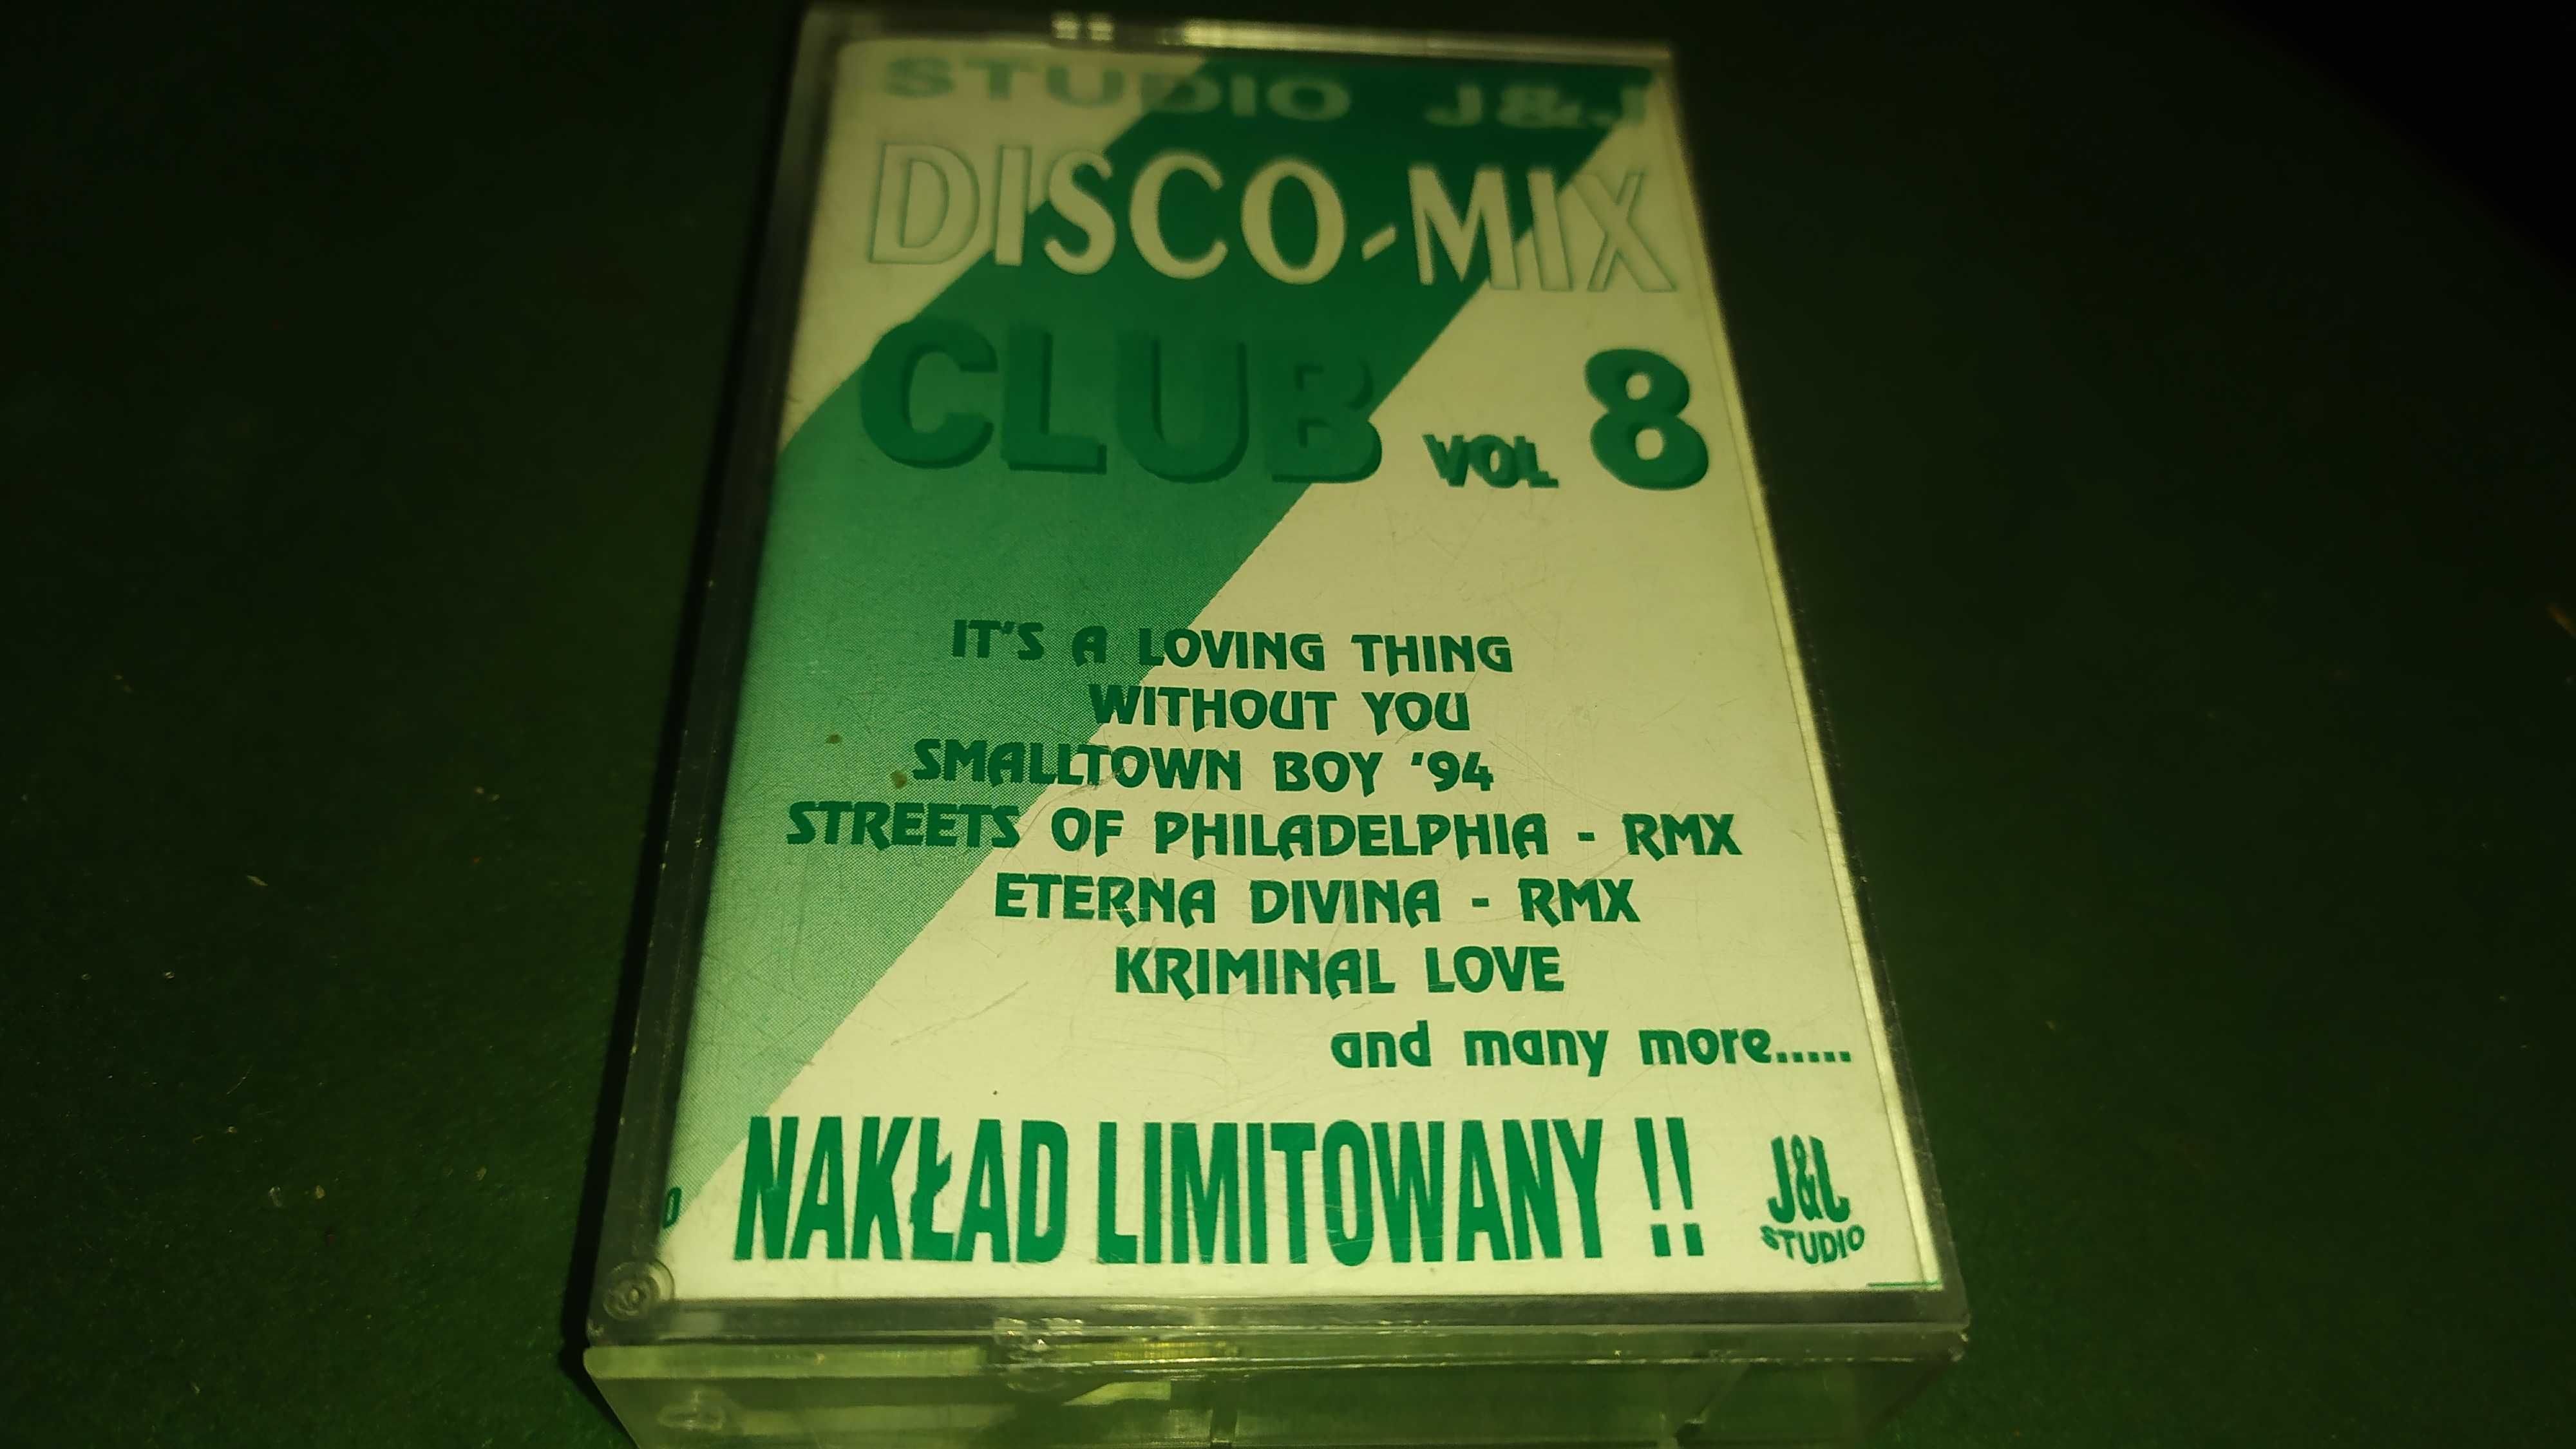 Studio J&J disco mix club vol 8 kaseta